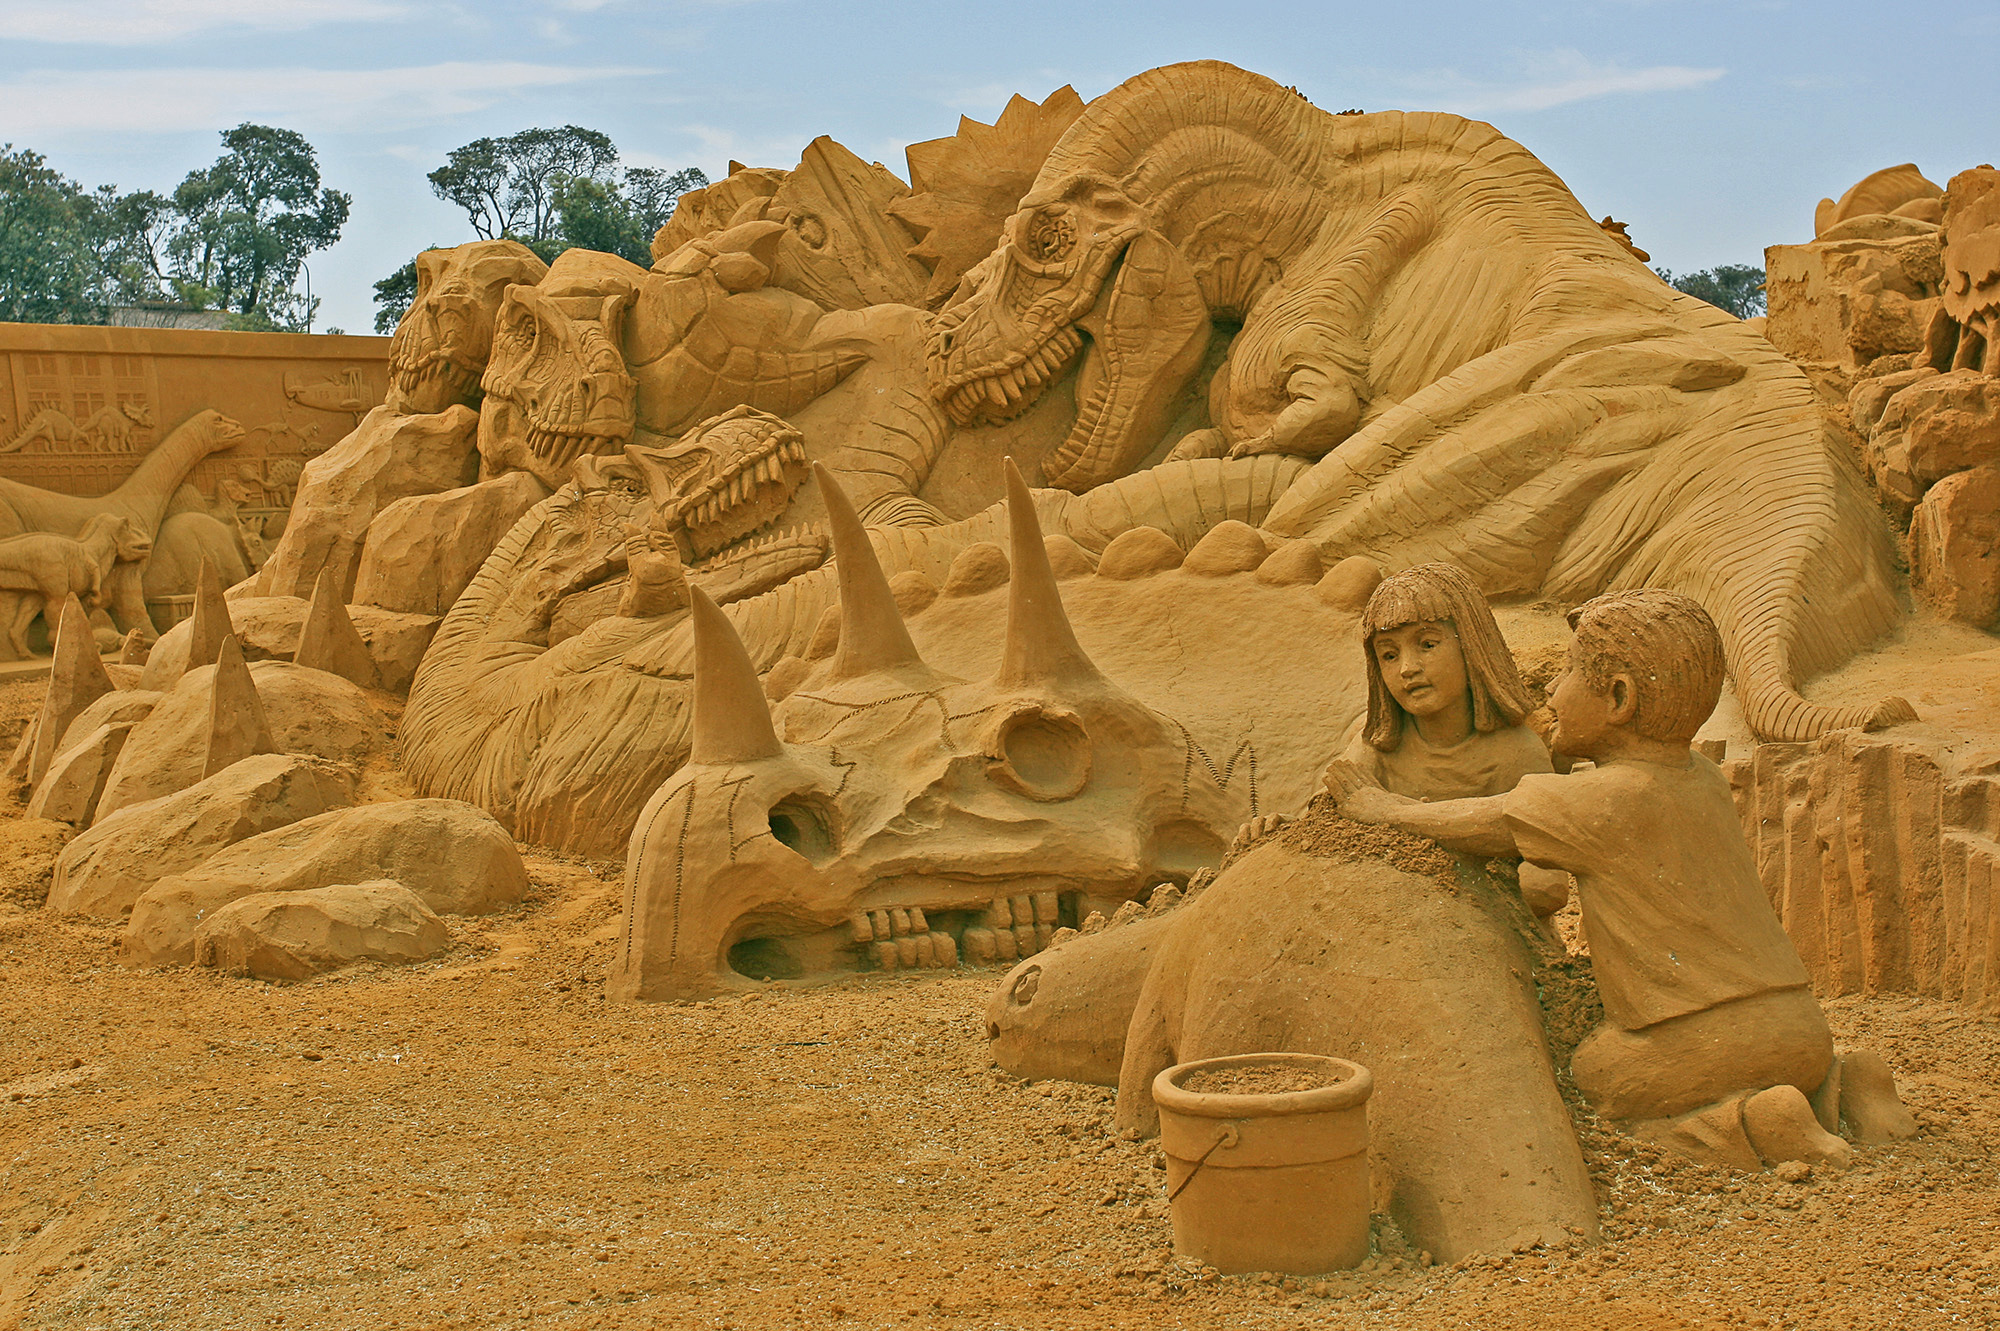 Sand art and play - Wikipedia